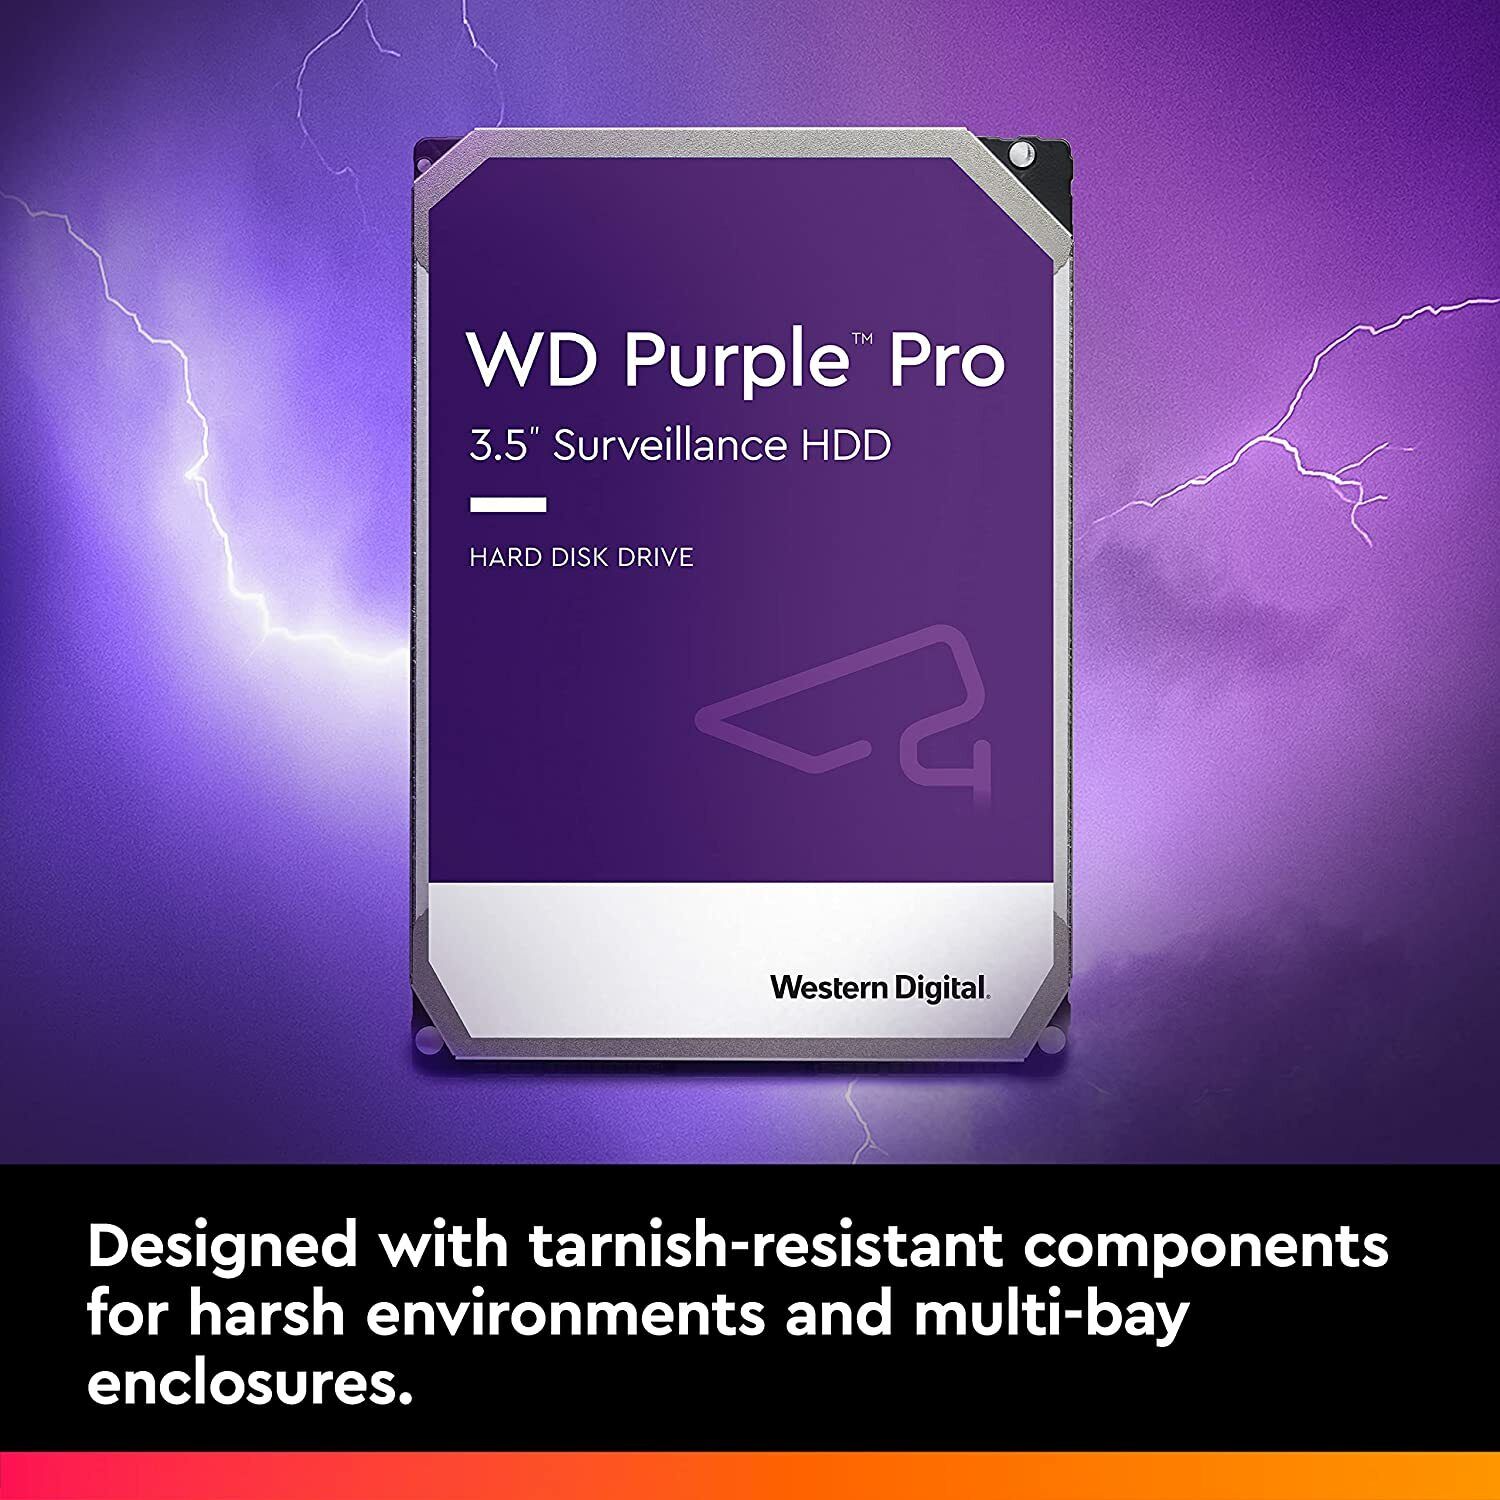 Western Digital Purple Pro 10TB Surveillance Hard Drive 3.5